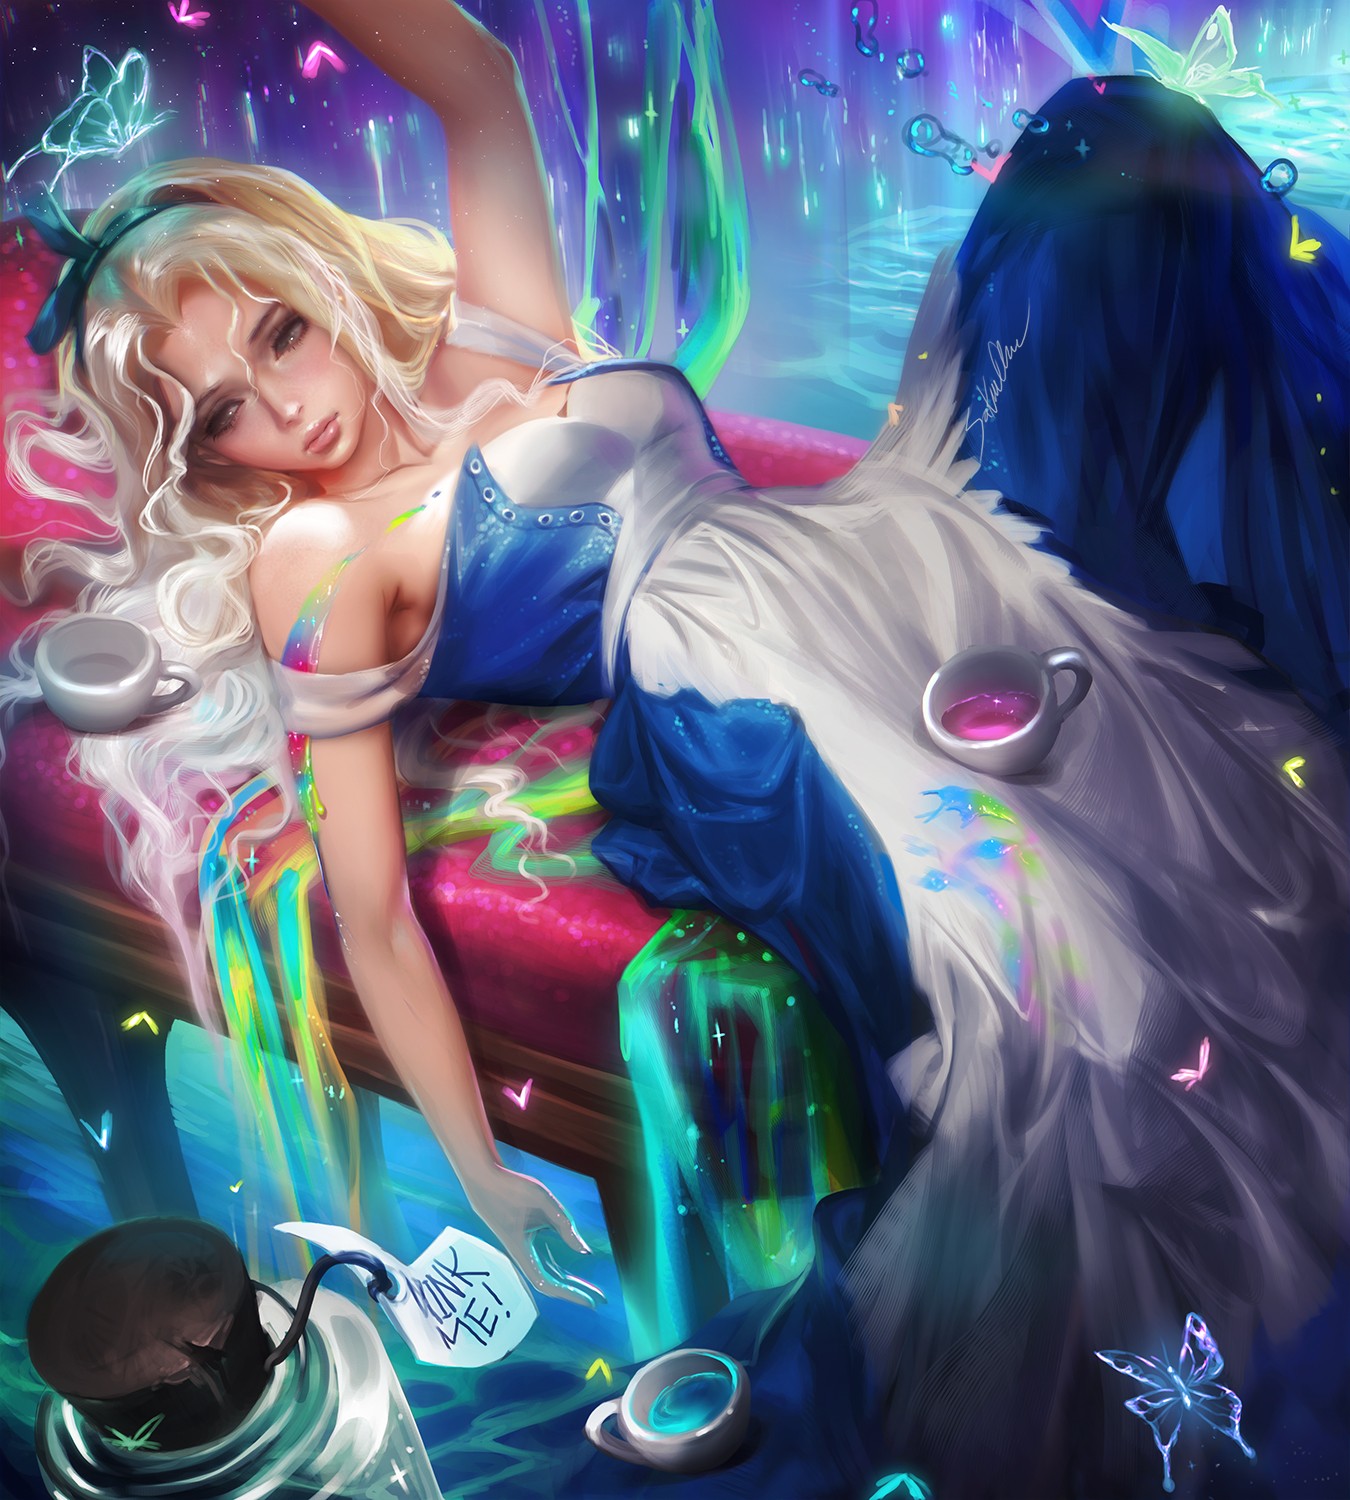 Anime 1350x1500 Sakimichan realistic Alice in Wonderland fantasy art fantasy girl cup dress lying on back blonde women